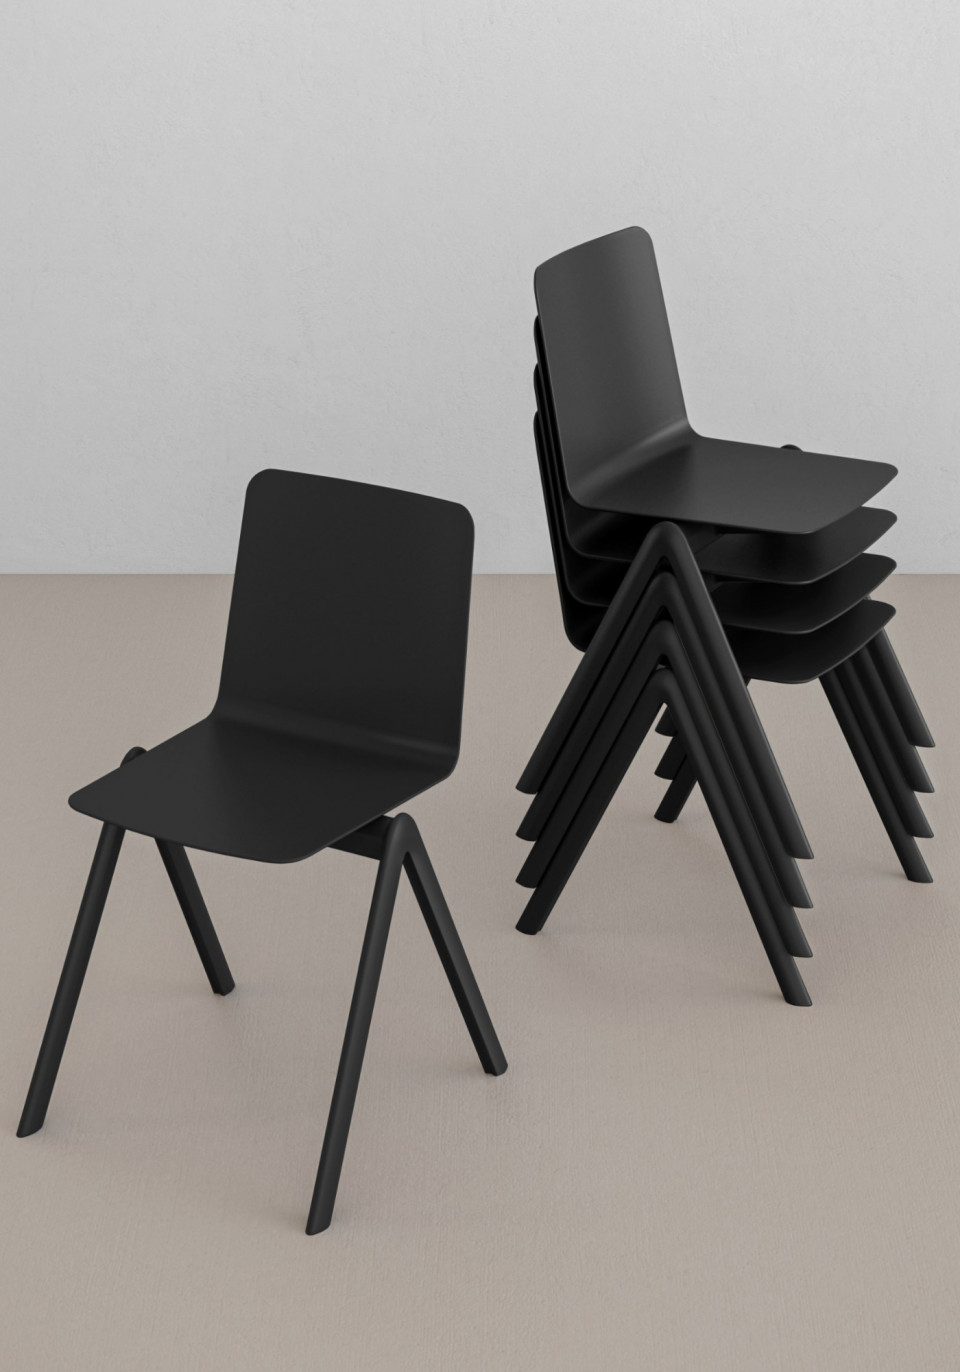 Stack chair in black polypropylene